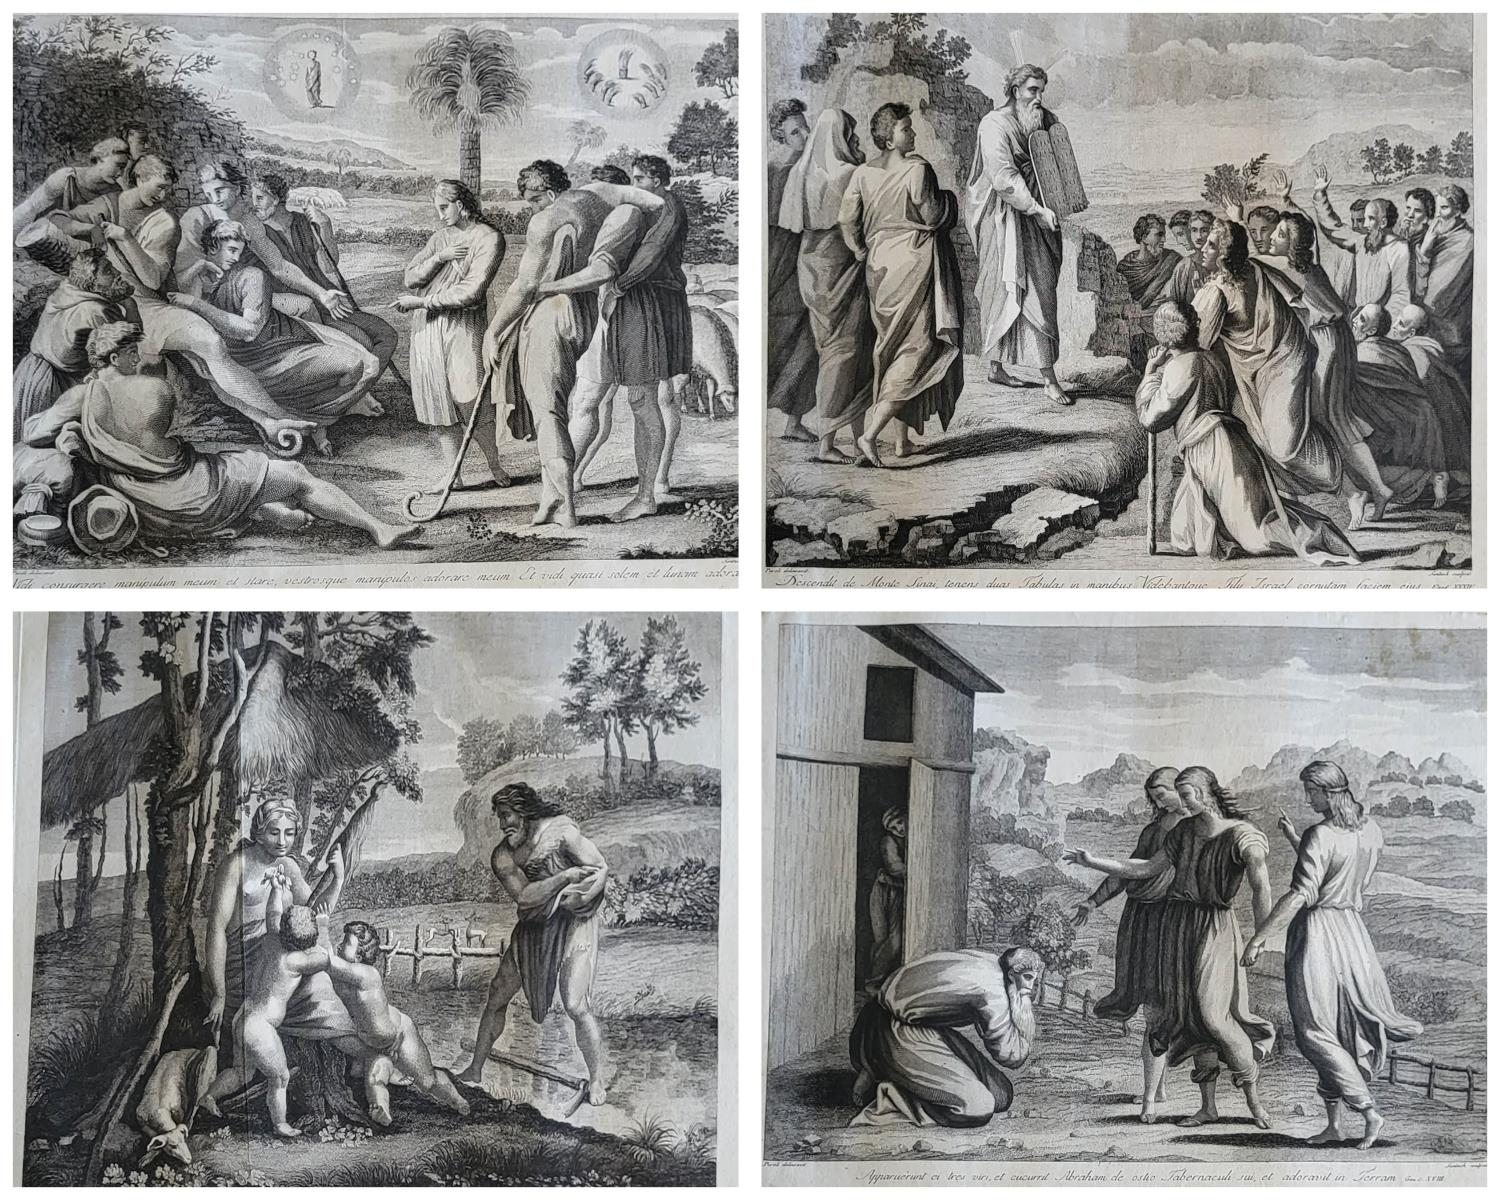 PAROL AND BY ANTONIO SUNTACH, 1744 - 1828, AFT SANZIO OF URBINO, RAFFAELLO,1483 - 1520 "Former